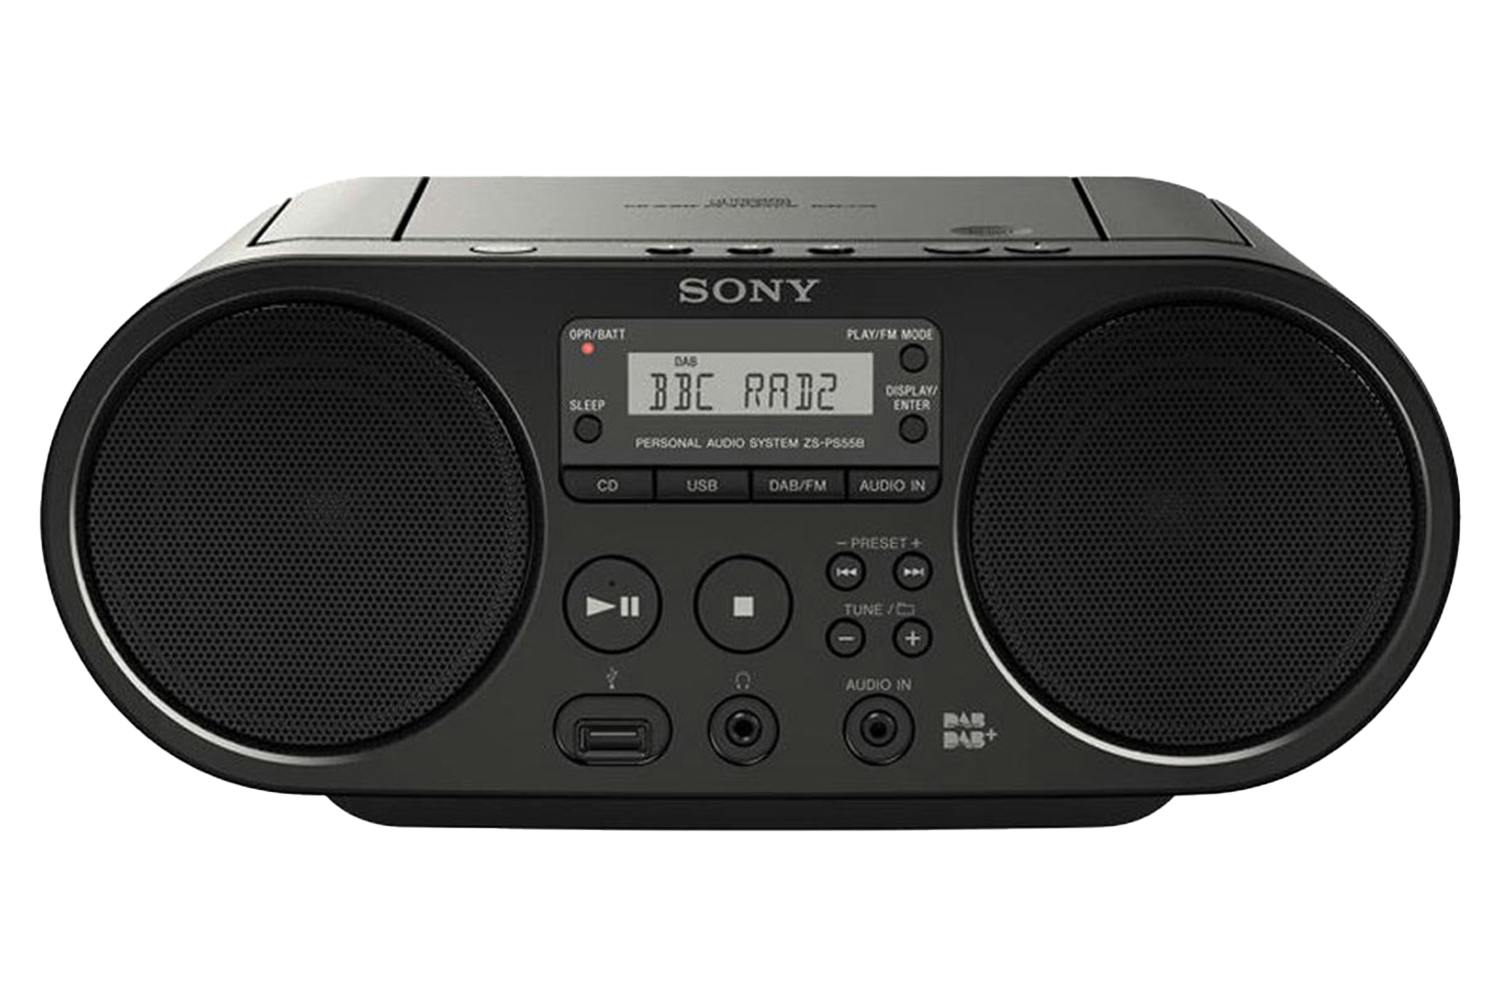 Portable Radio CD Player Boombox with Bluetooth & FM Radio, USB Port, AUX  Input, Headphone Jack,Compact CD Player Radio Stereo System,CD-R/CD-RW/MP3